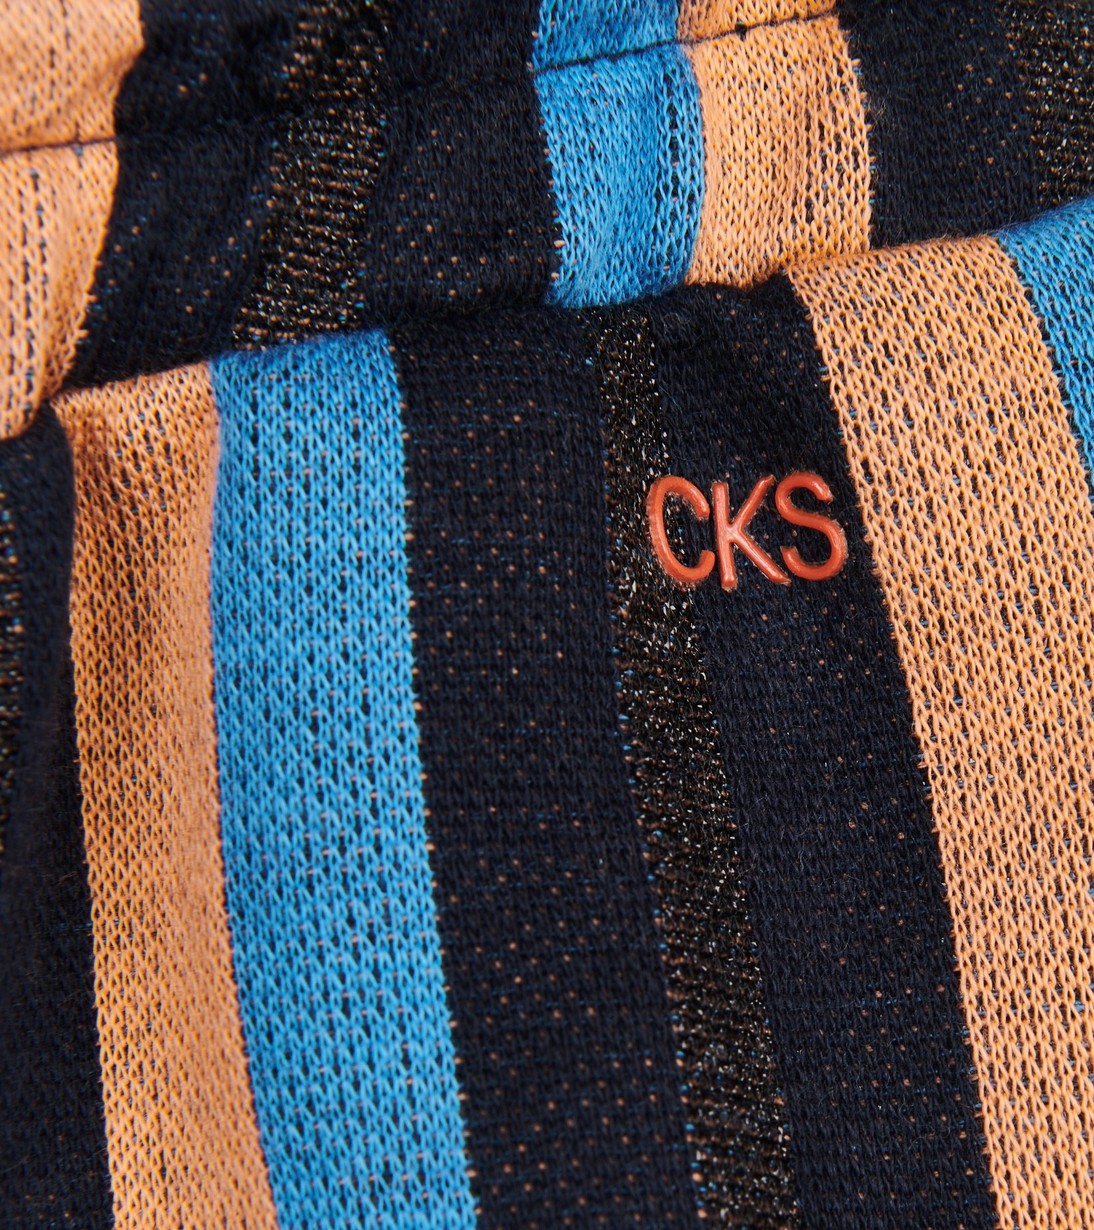 CKS Kids - CISH - jupe longue - multicolore